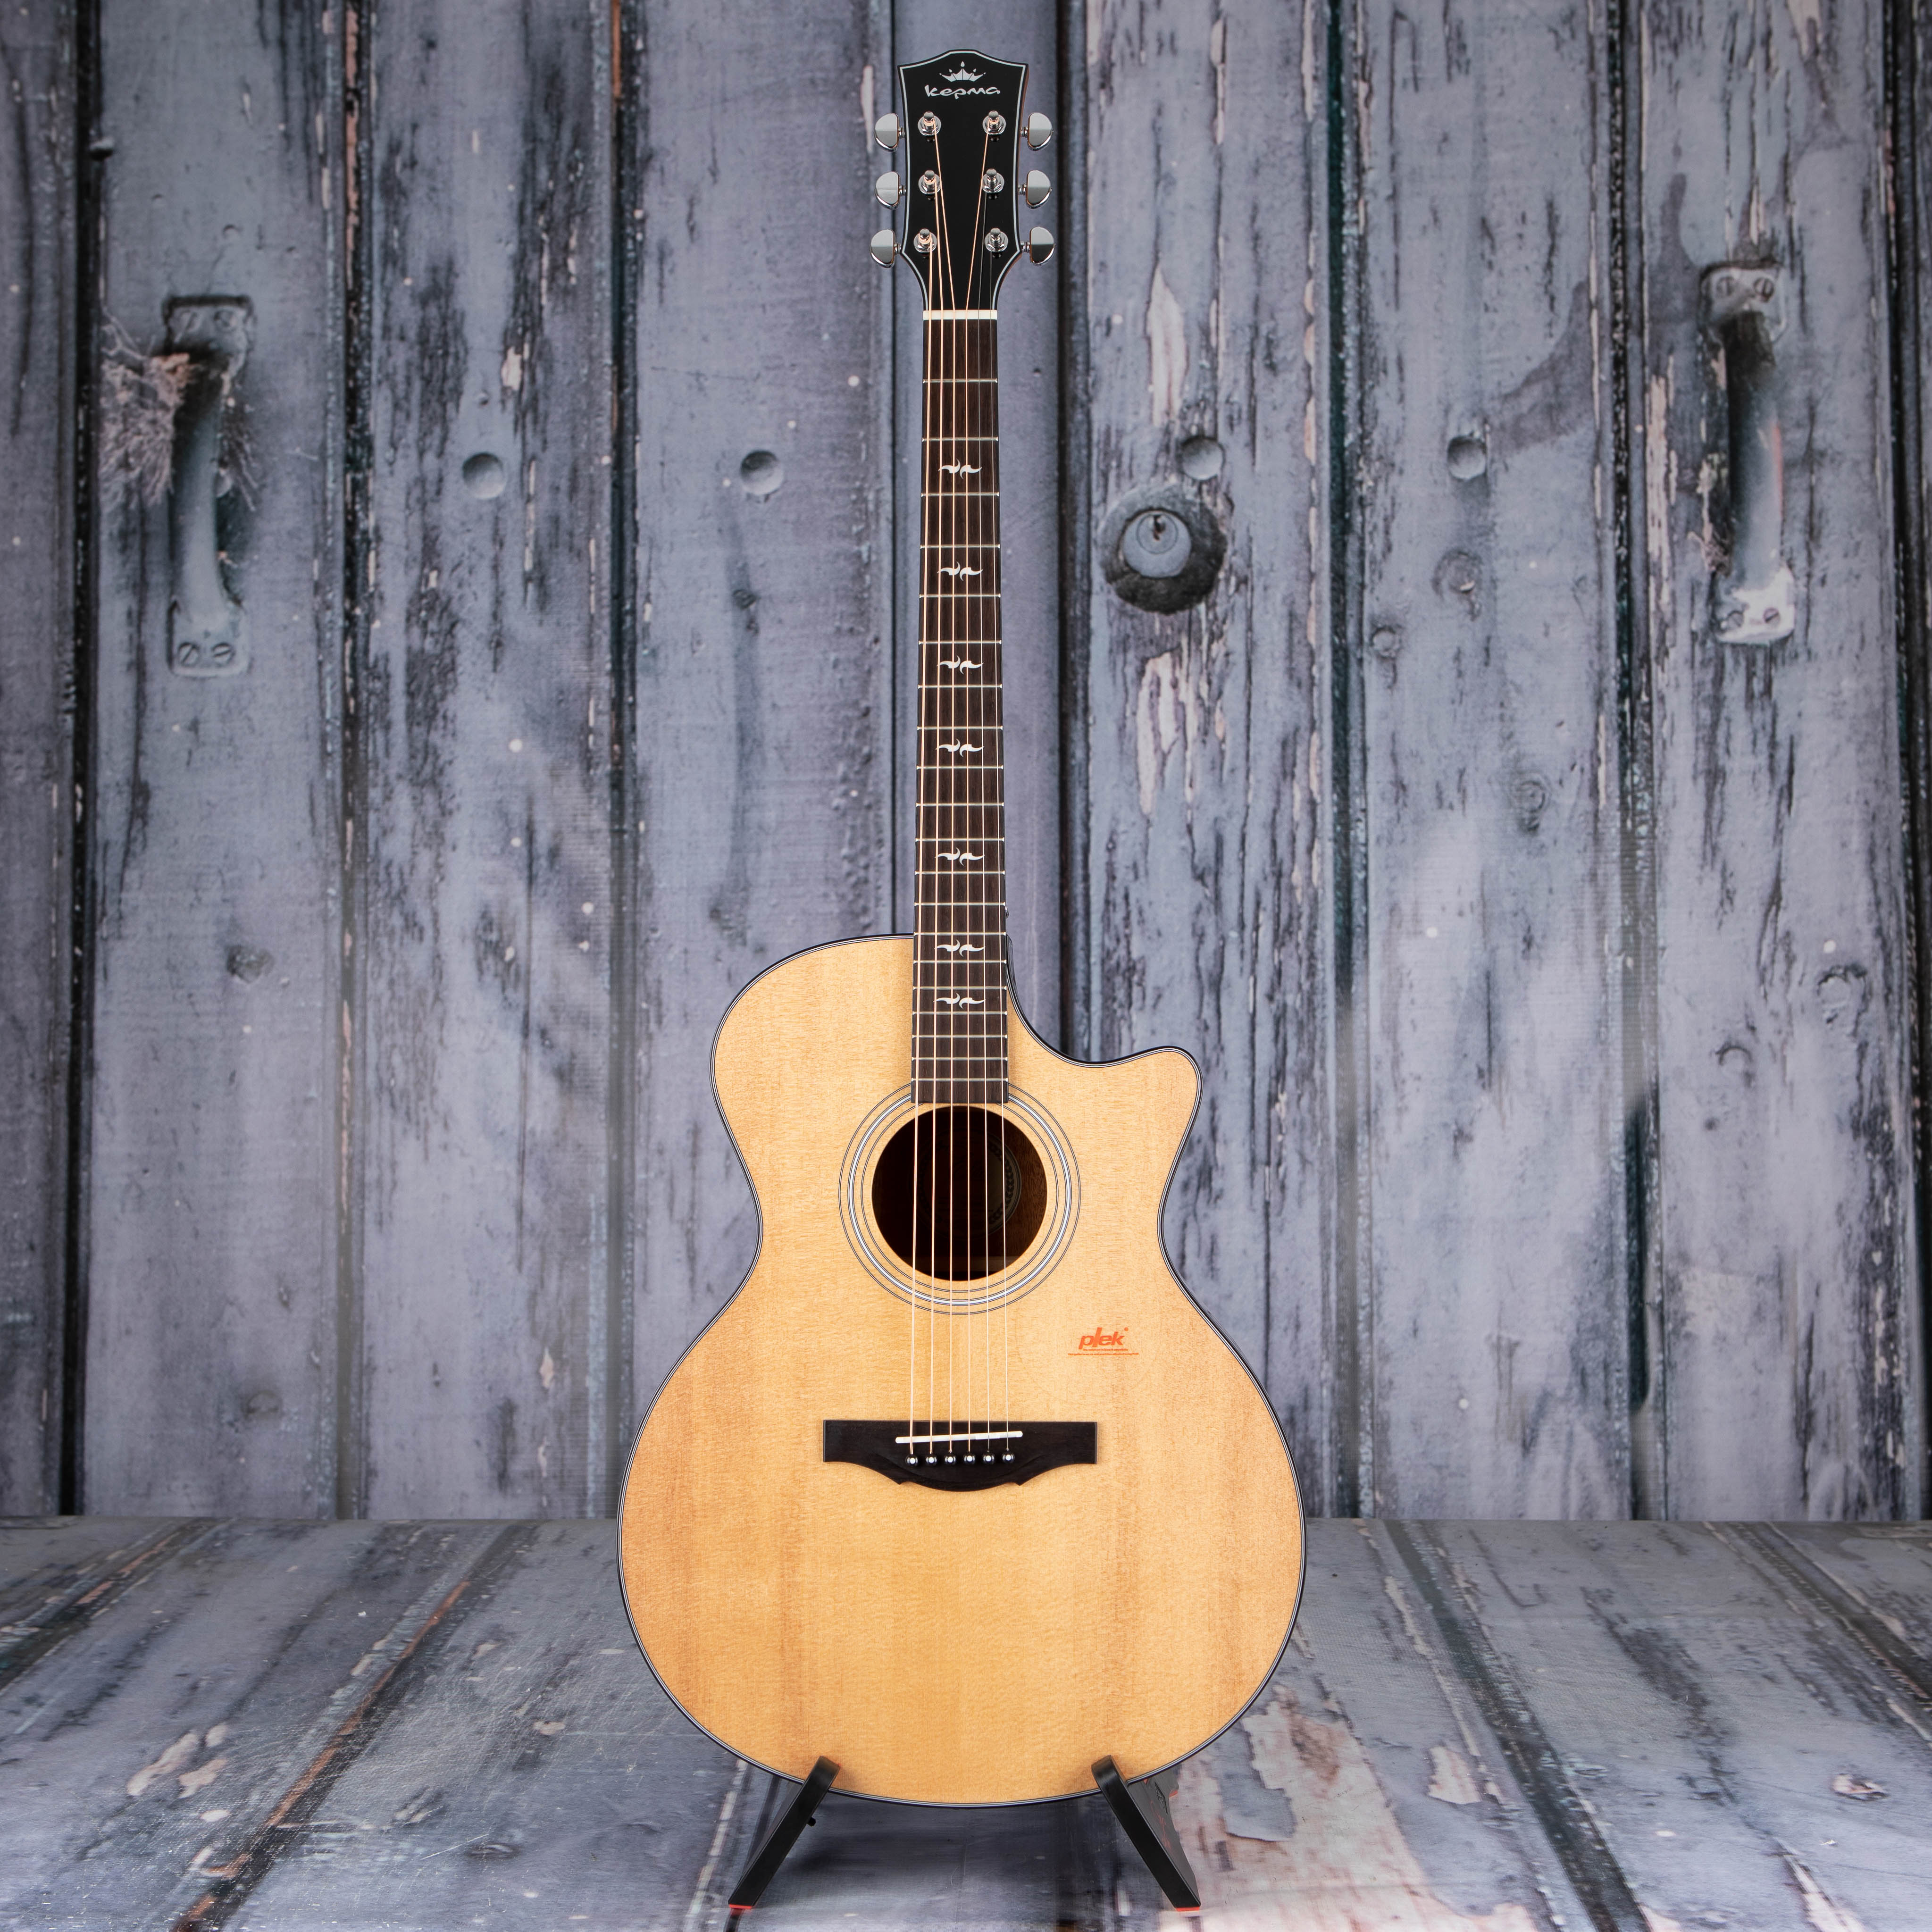 Kepma GA2-131 Elite Grand Auditorium Acoustic Guitar, Natural, front